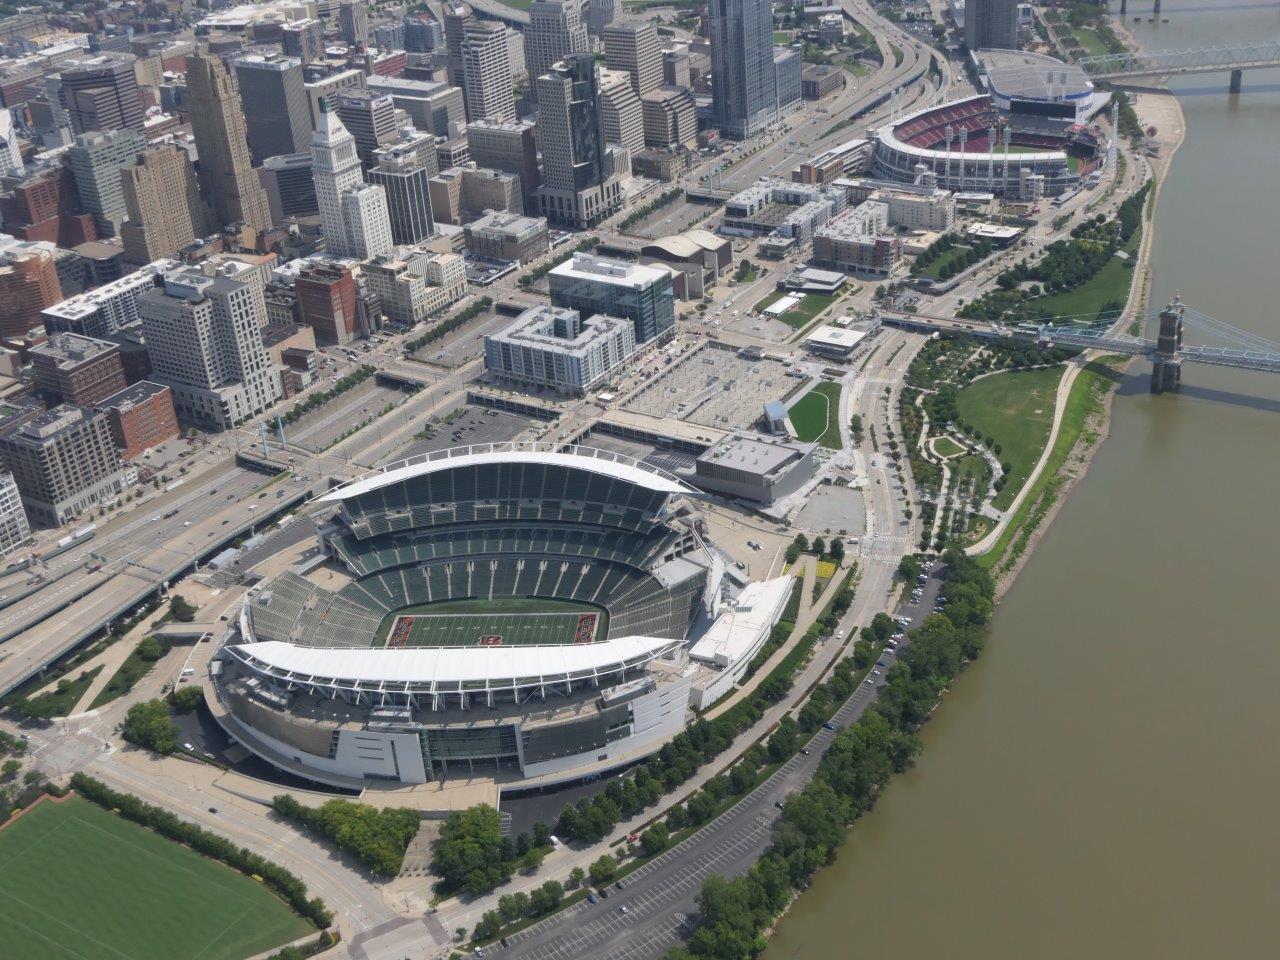 Riverfront Stadium - history, photos and more of the Cincinnati